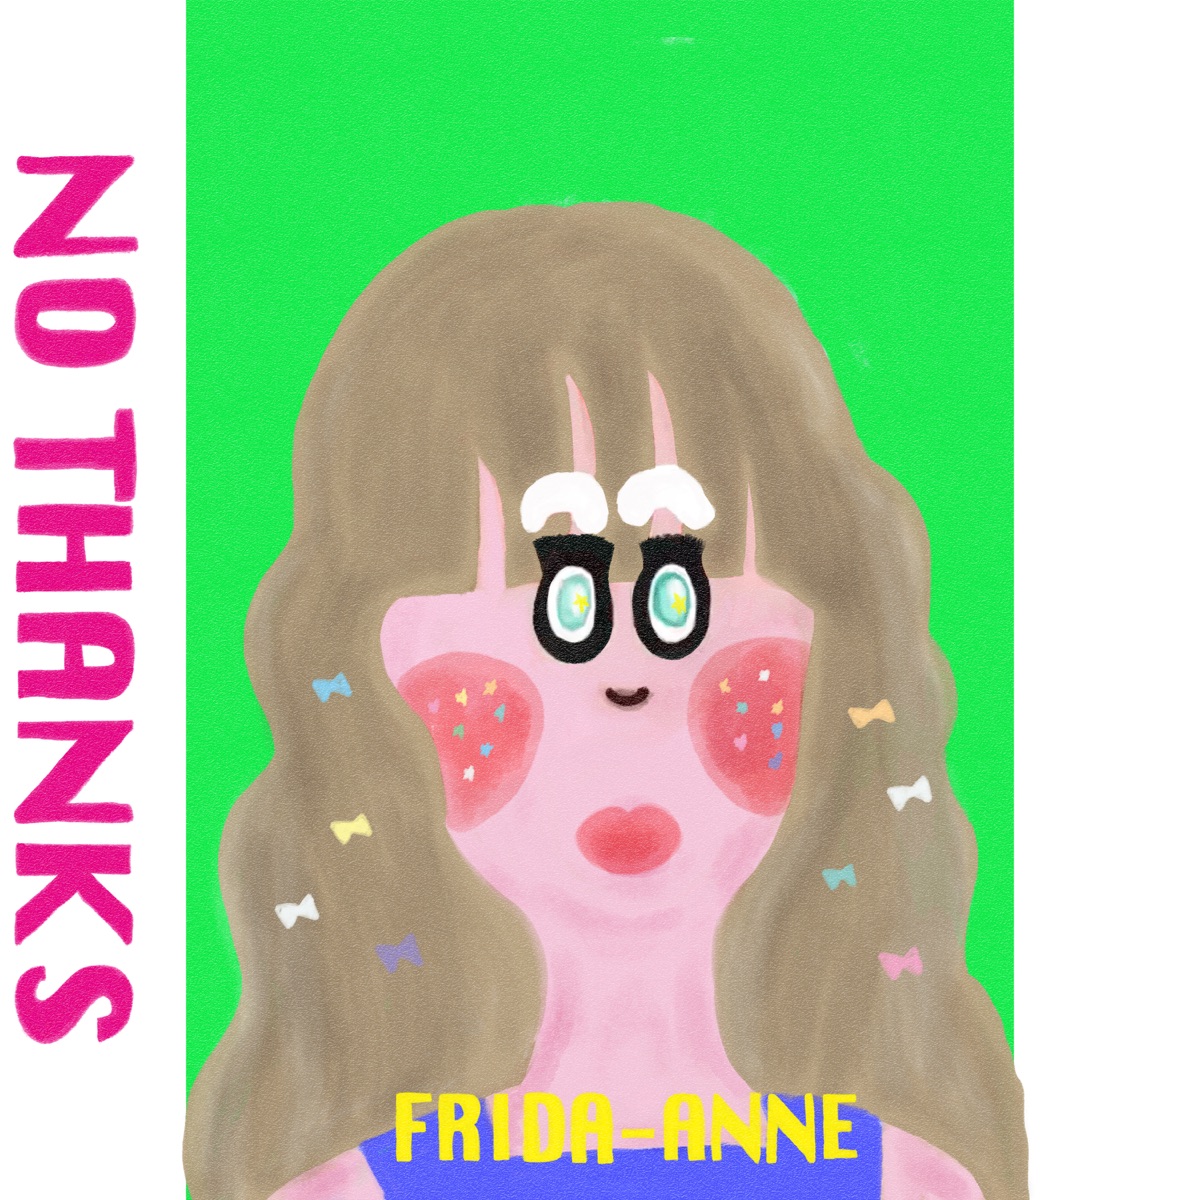 FRIDA-ANNE – NO THANKS – Single